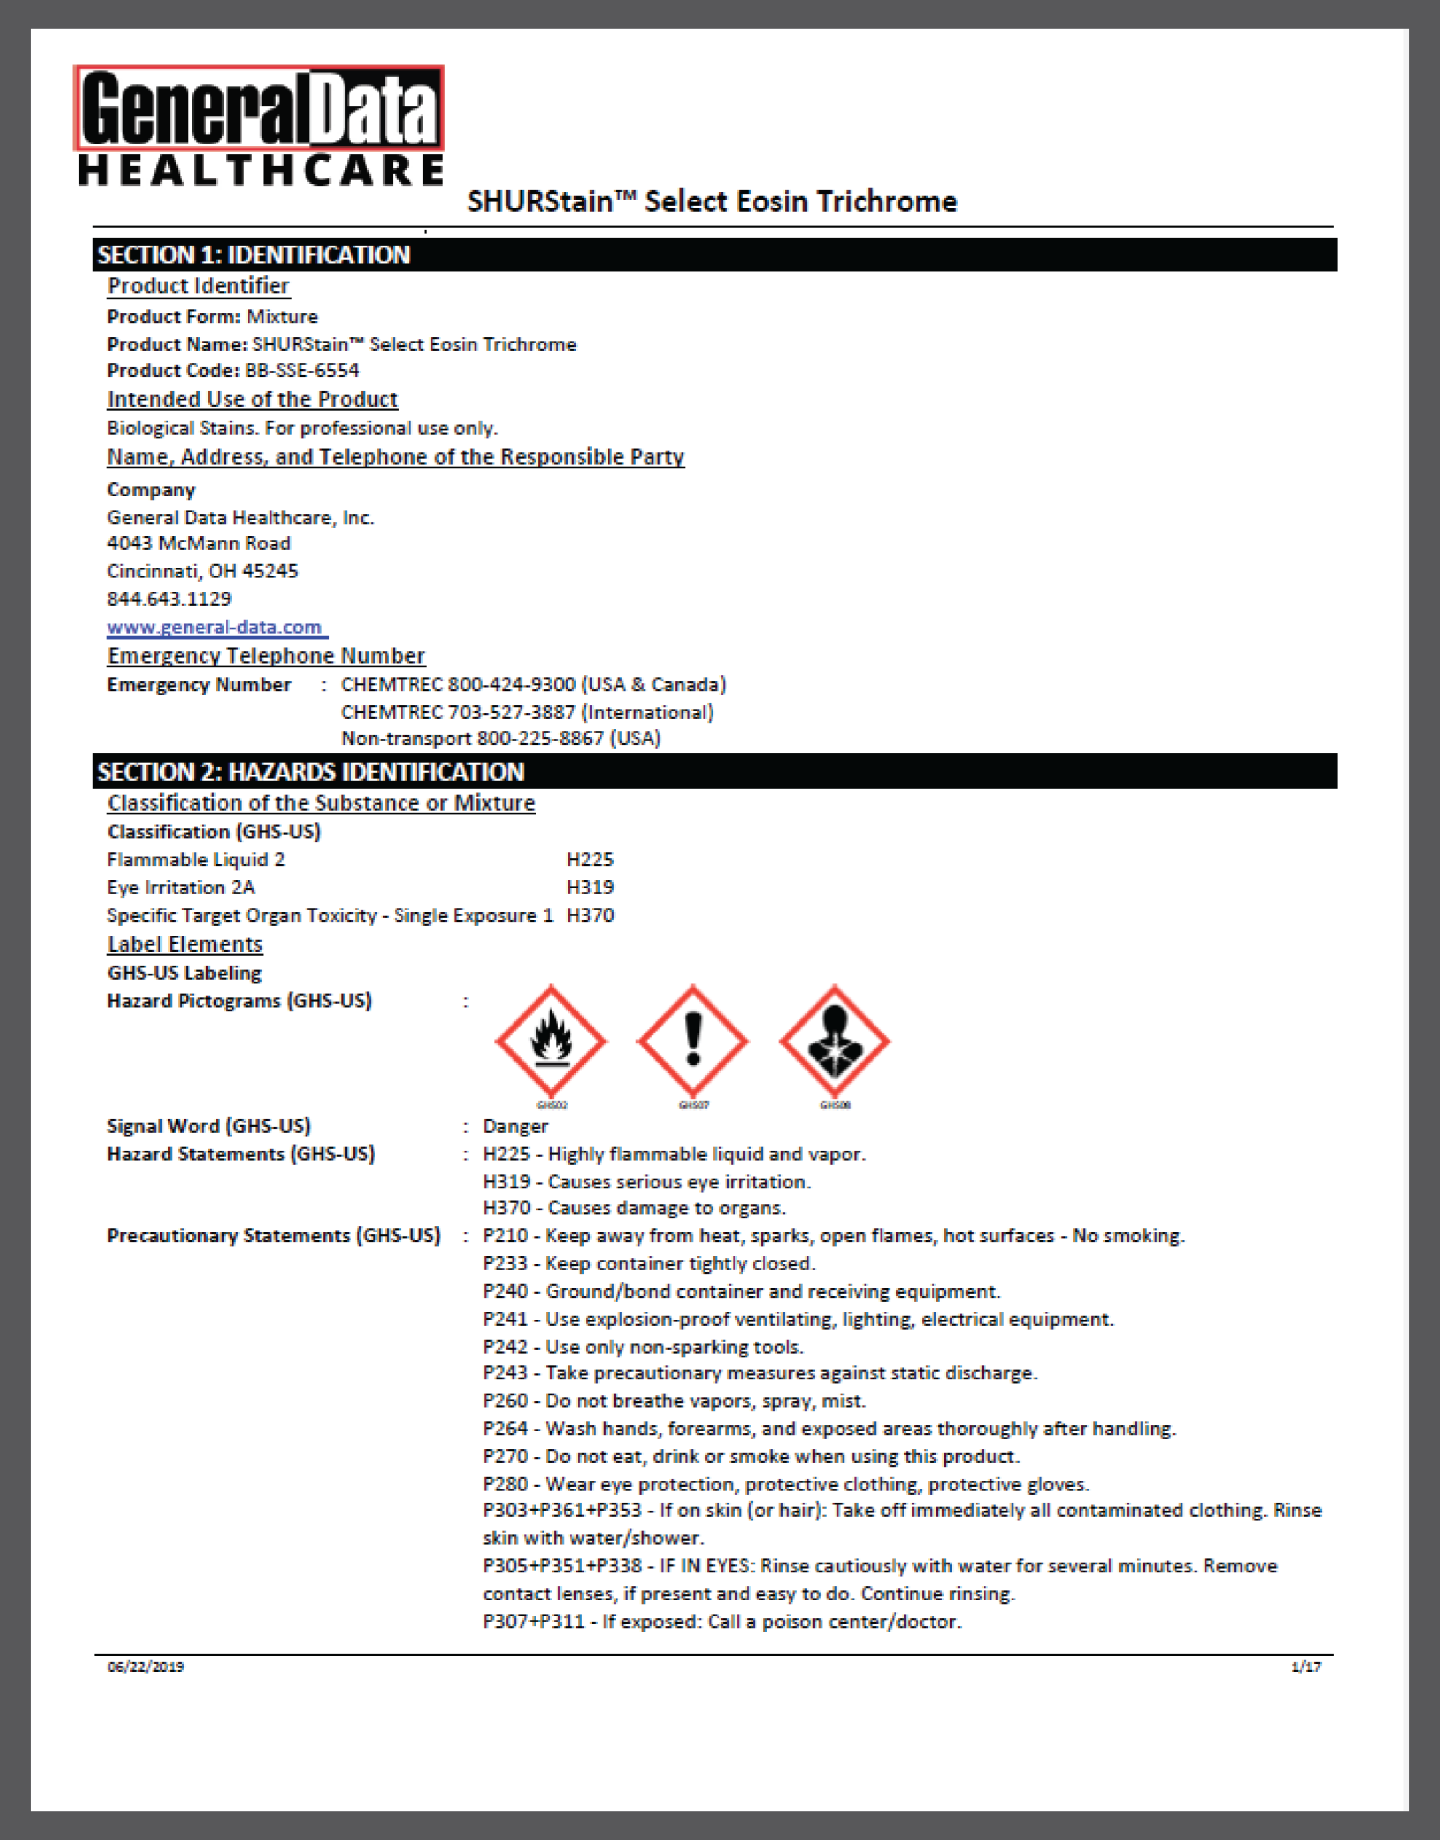 SHURStain Select Eosin Trichrome Safety Data Sheet